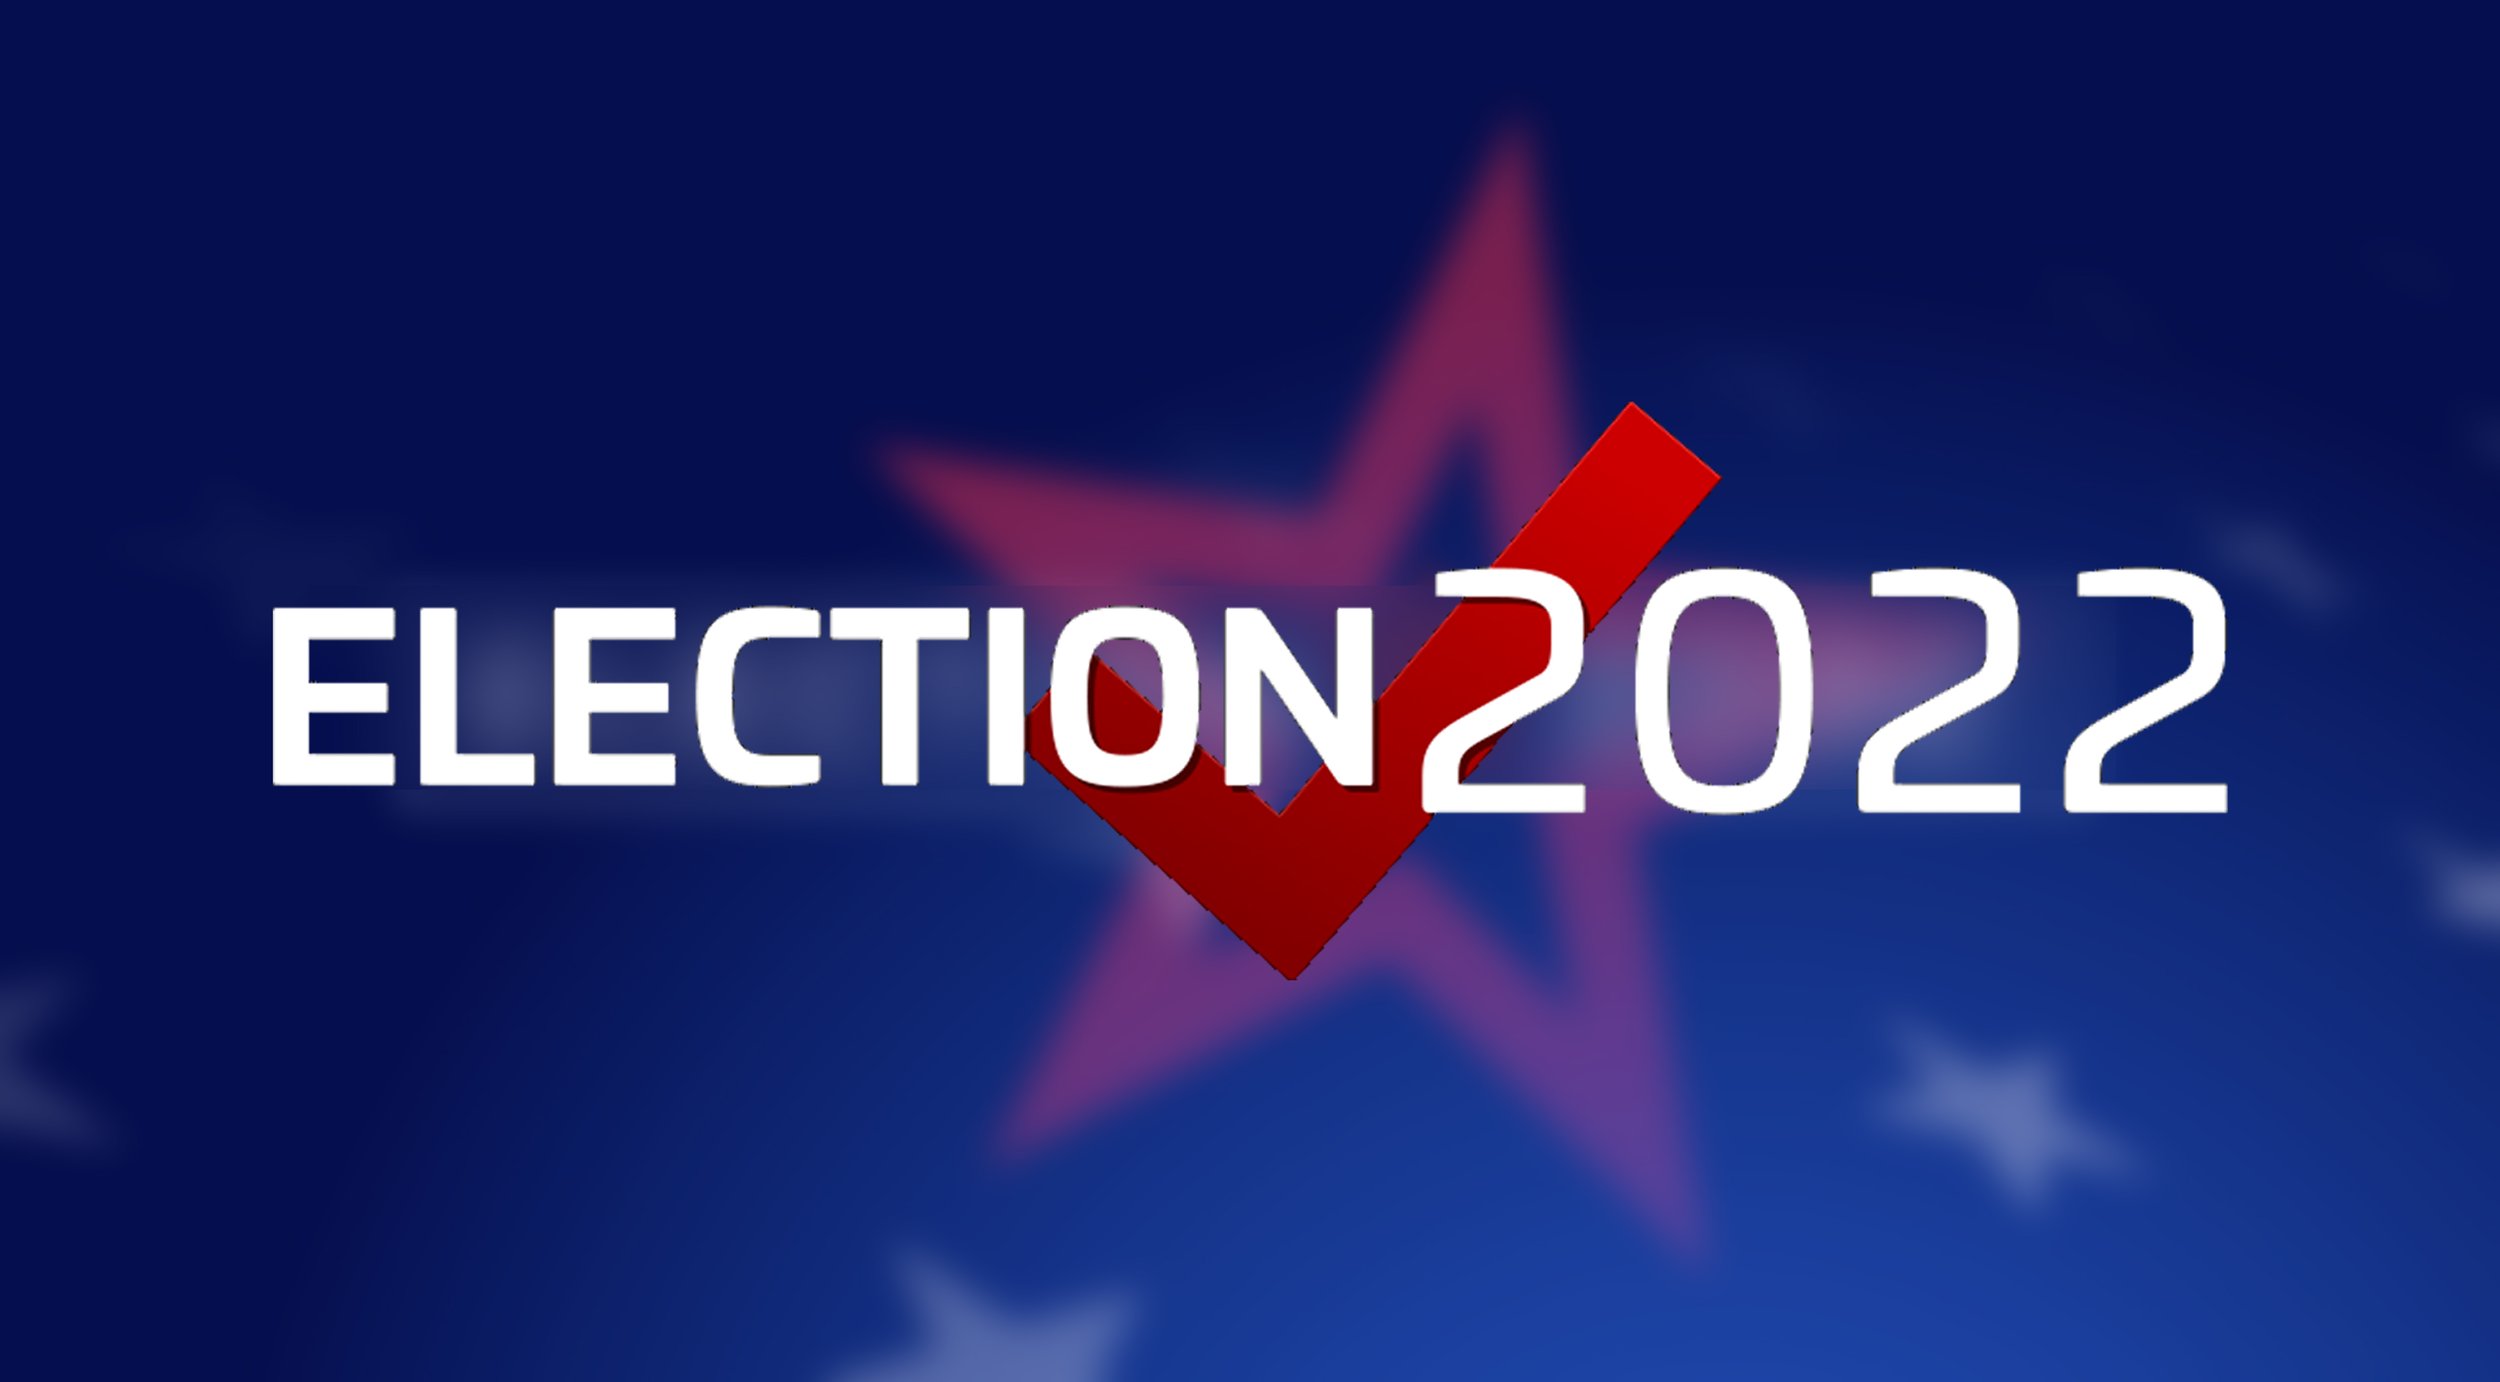 ELECTION 2022 PHOTO.jpg